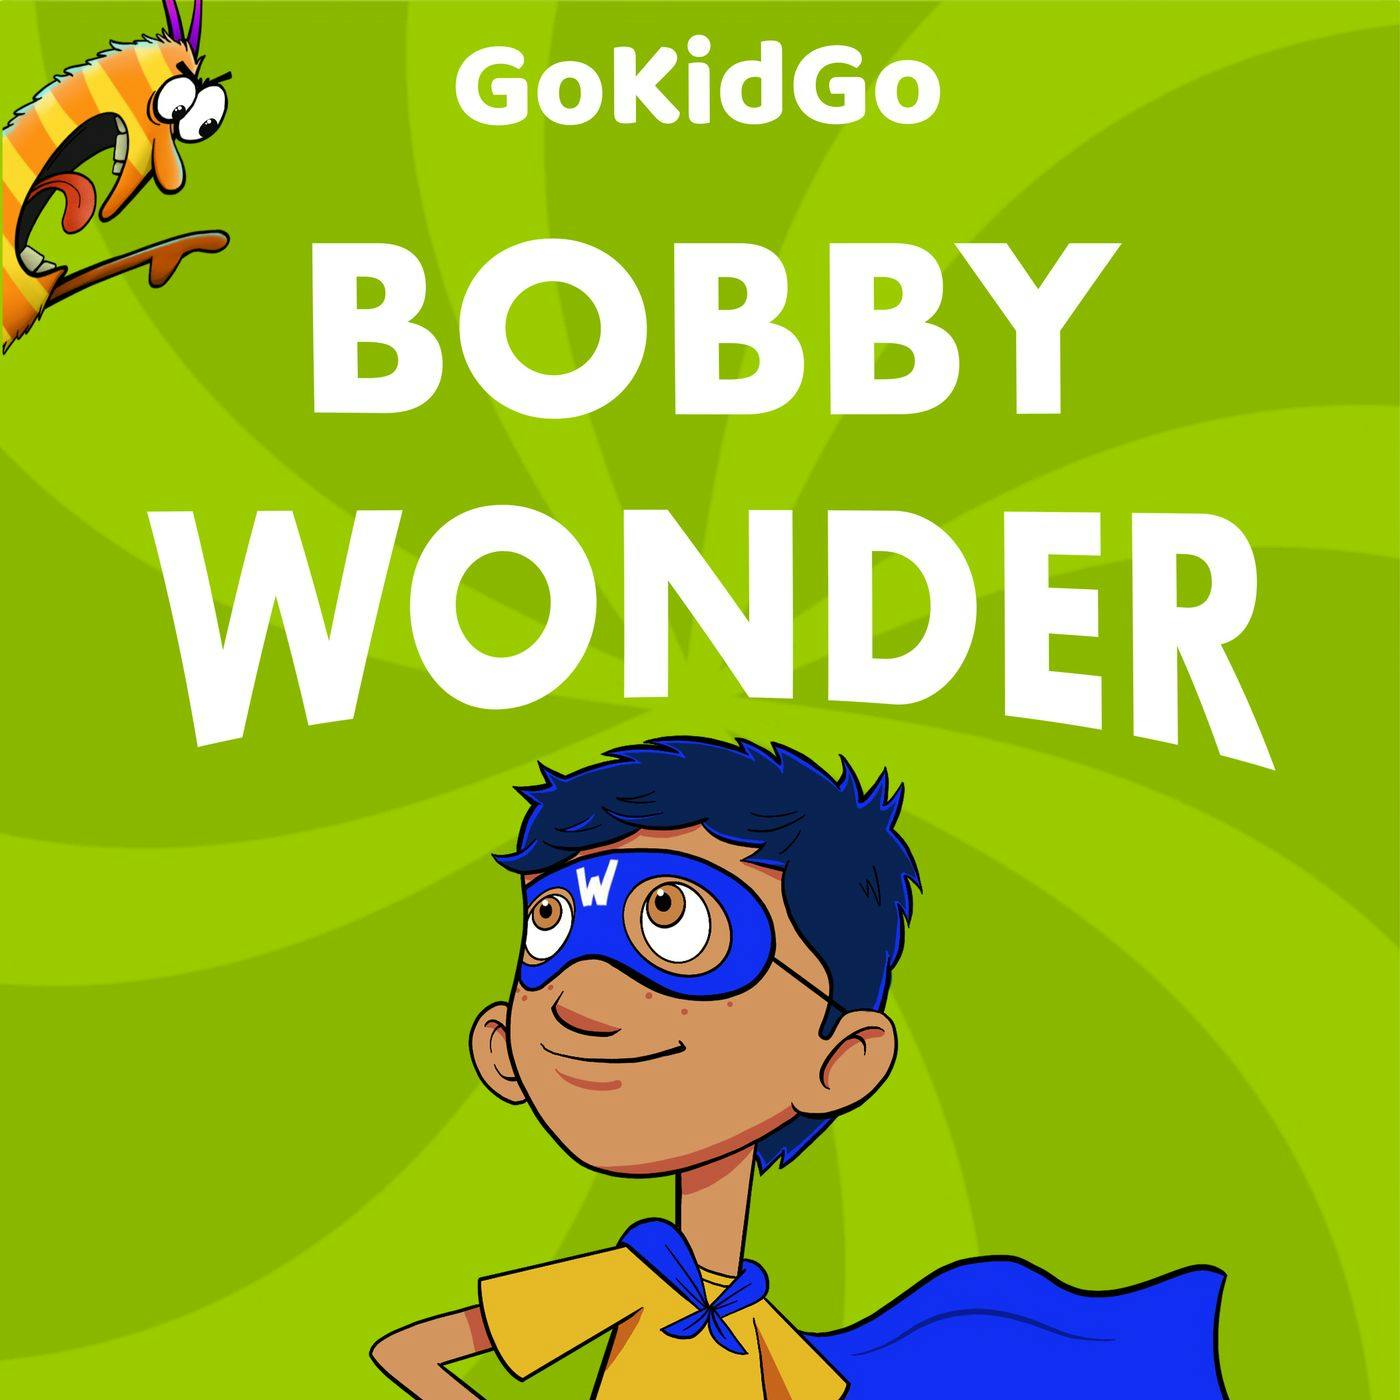 S3E4 - Bobby Wonder: Take Bobby to Work Day